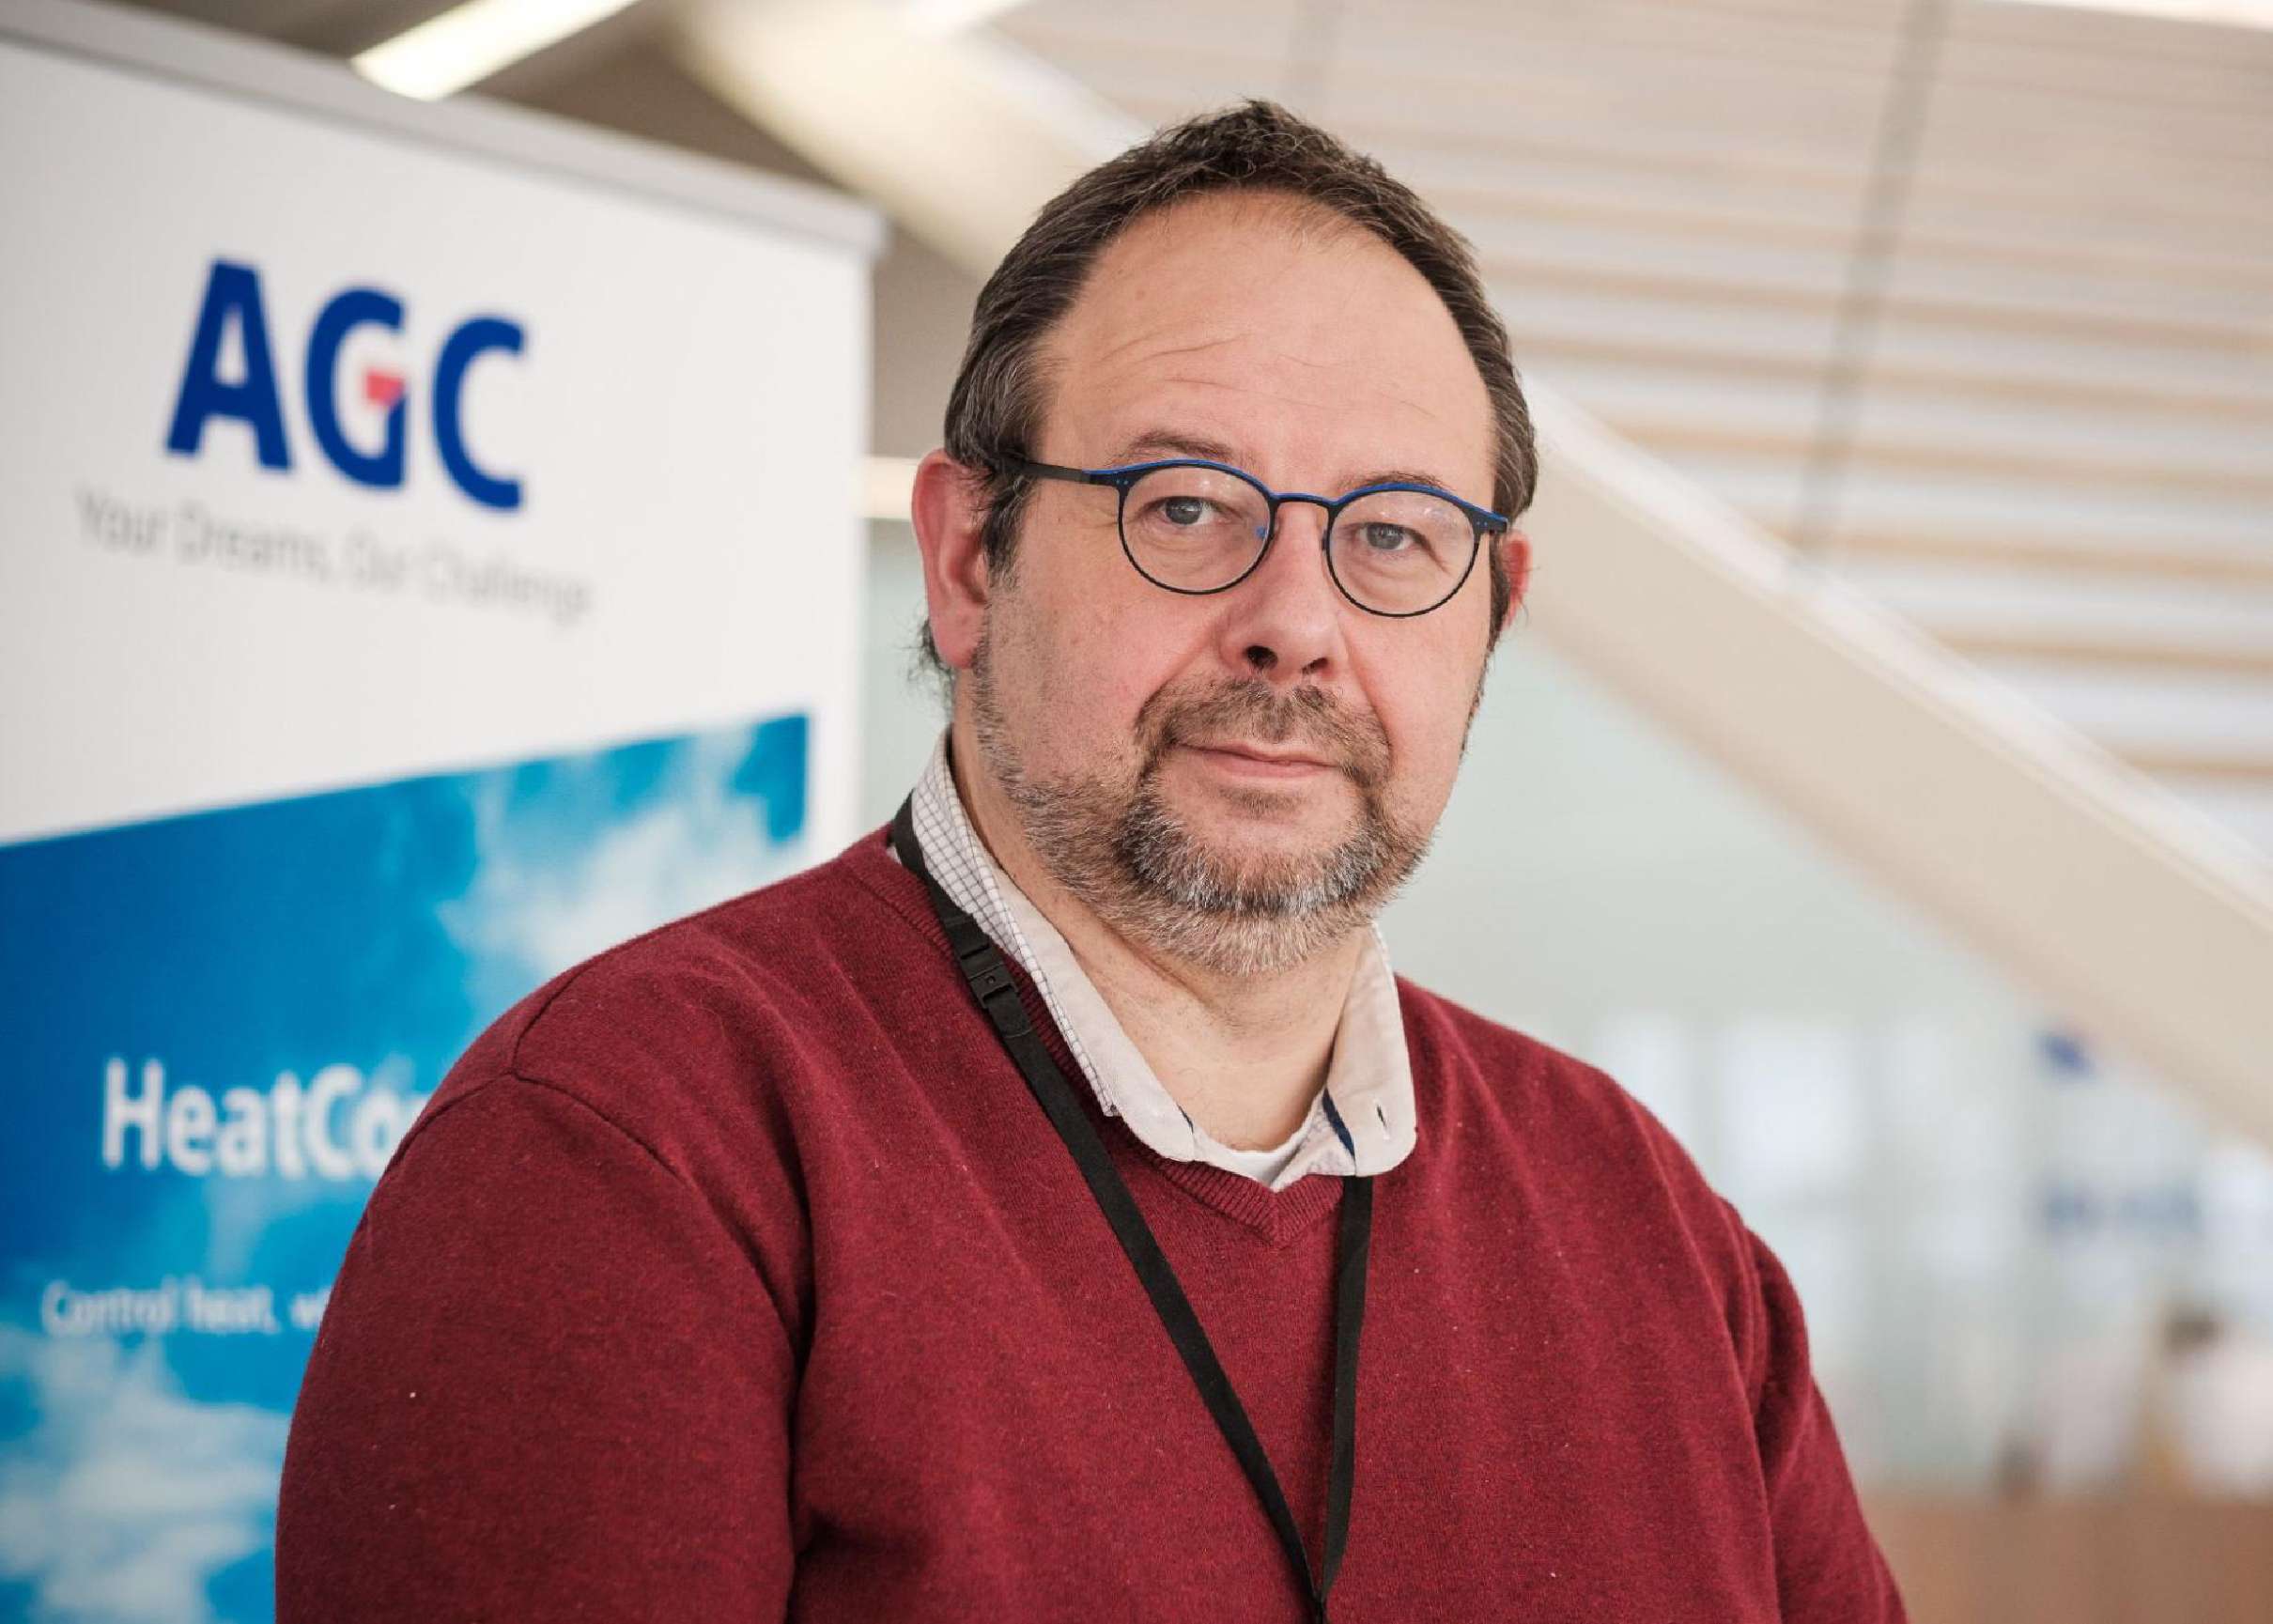 Benjamin Léonard, AGC’s IT Industrial Solutions Manager